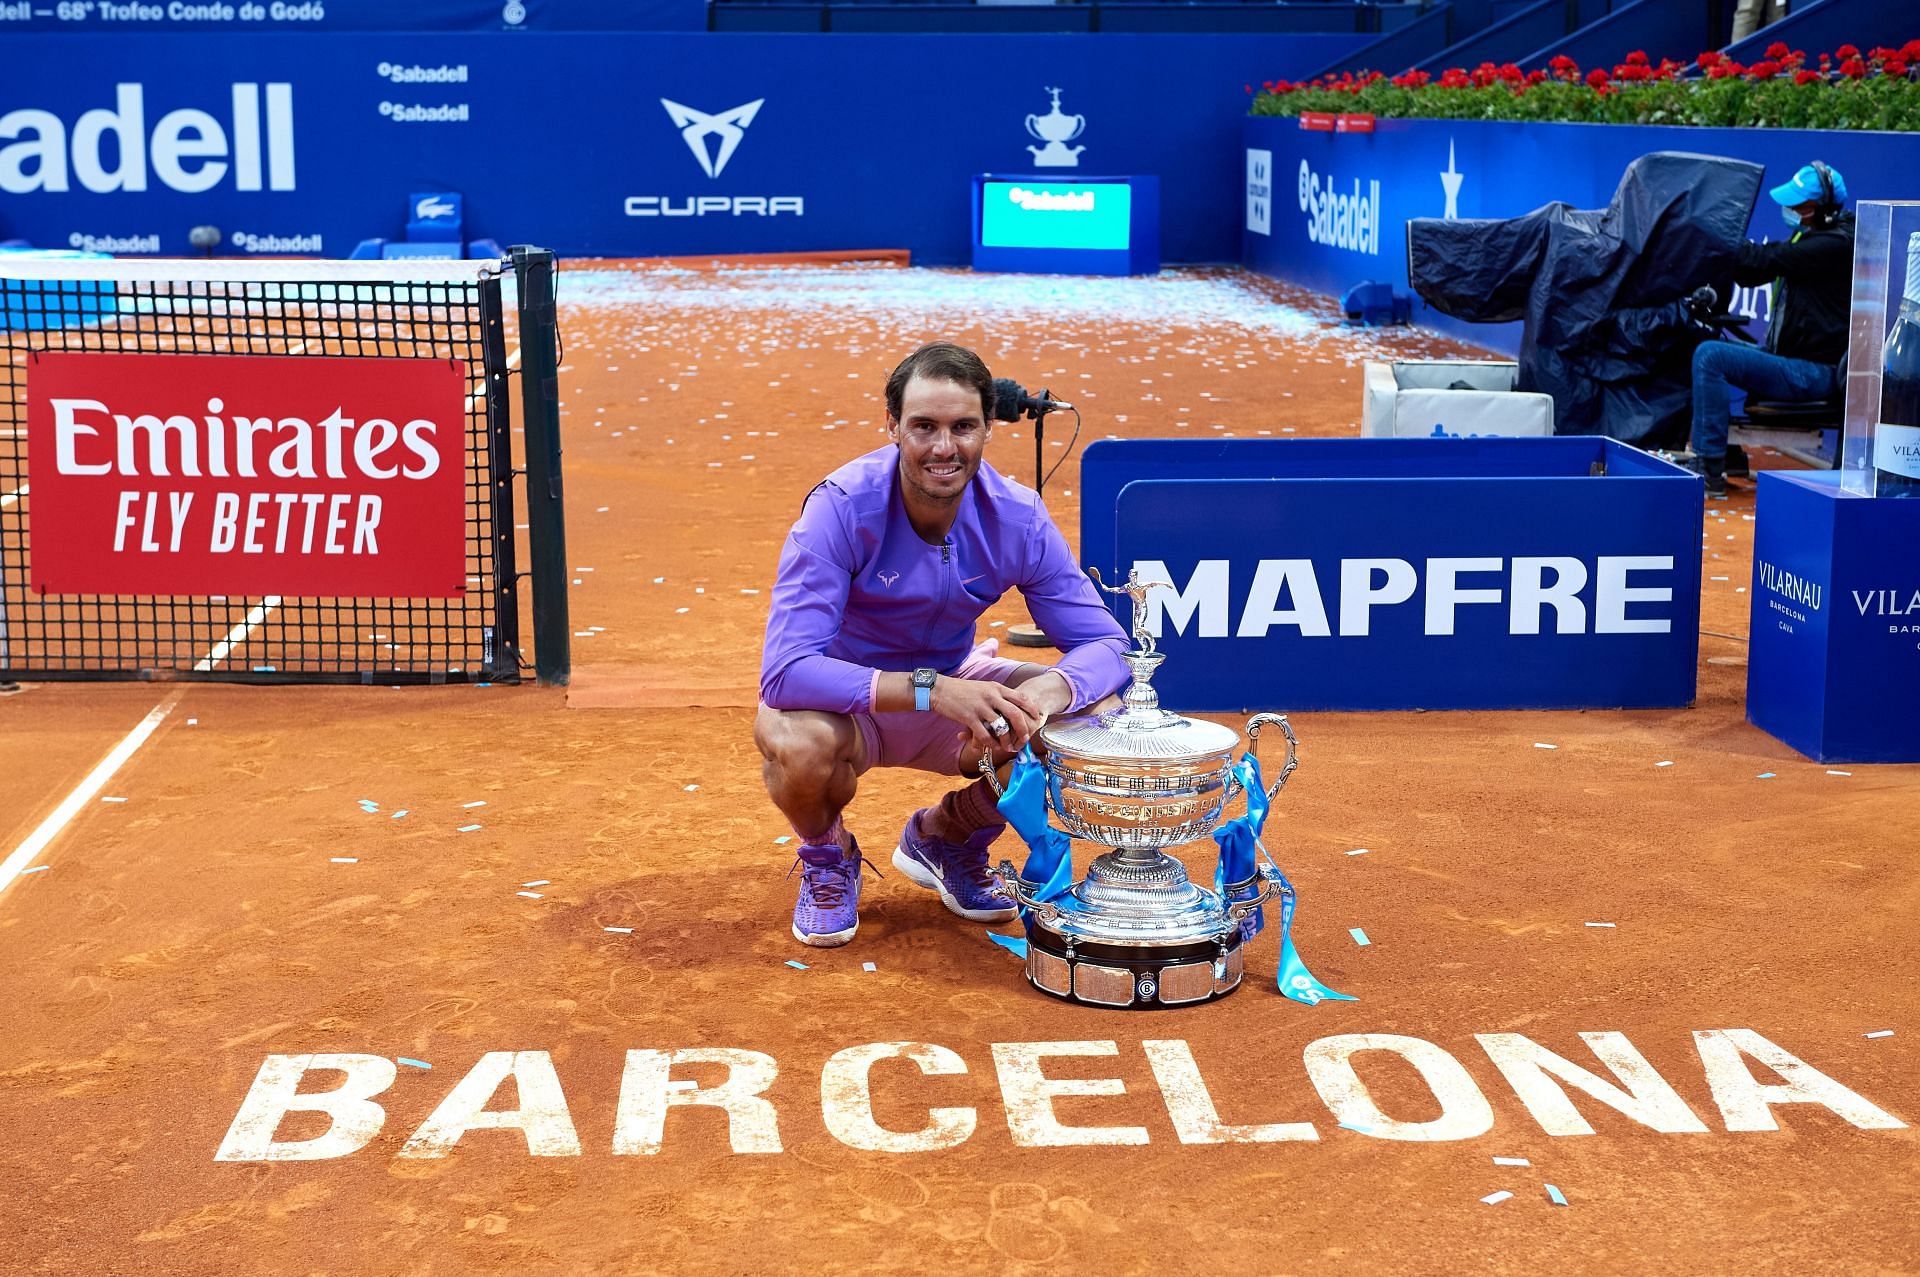 Rafael Nadal after winning the Barcelona Open 2021